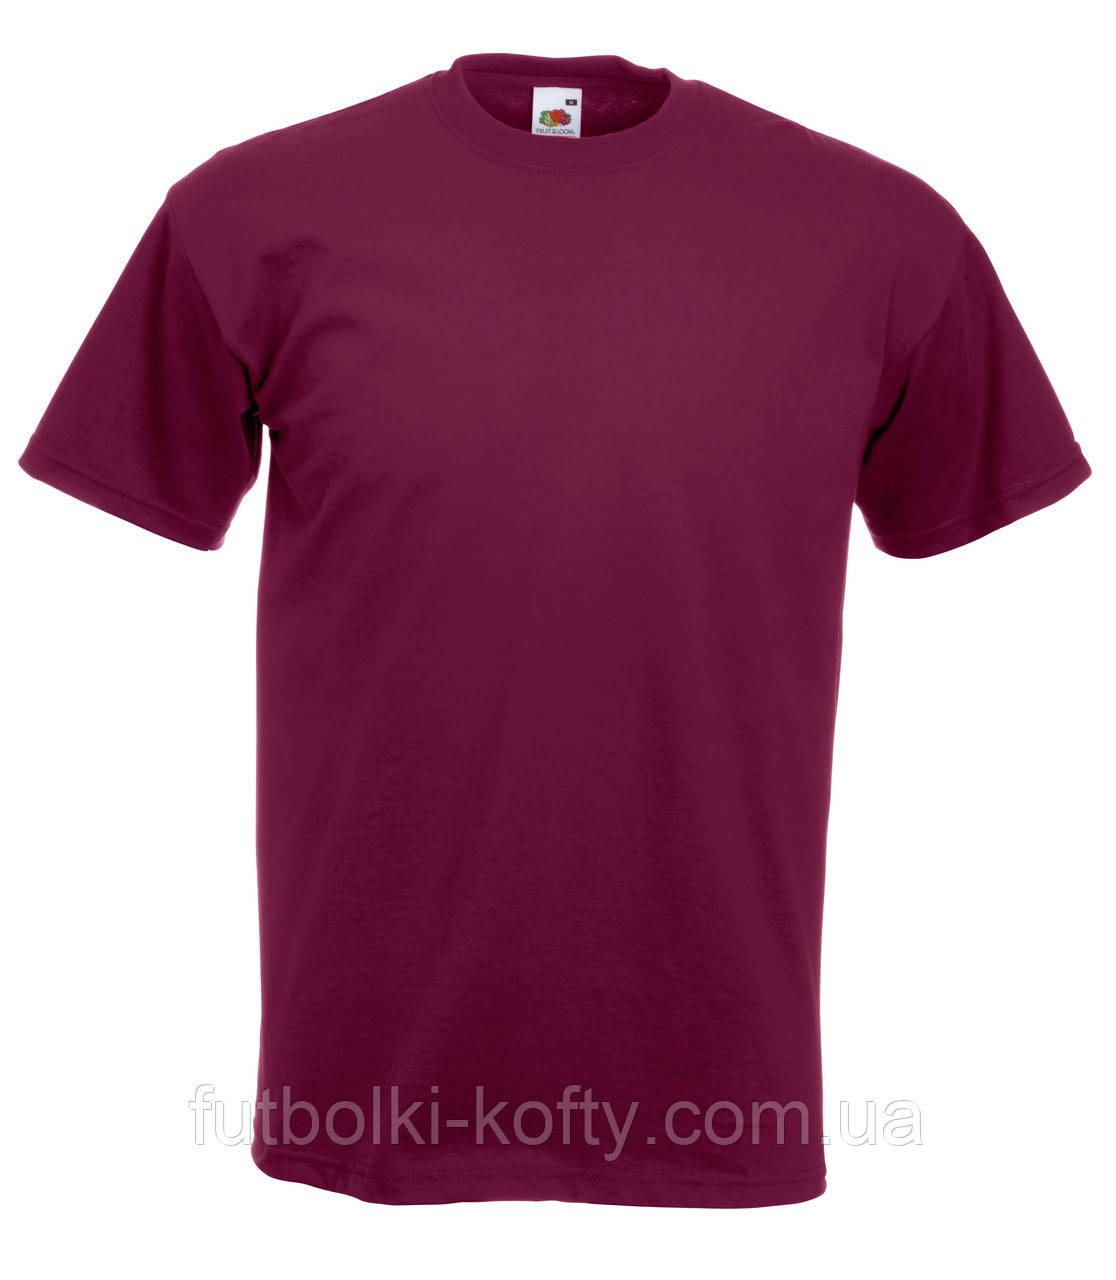 Чоловіча футболка Супер преміум Бордова Fruit of the loom 61-044-41 M